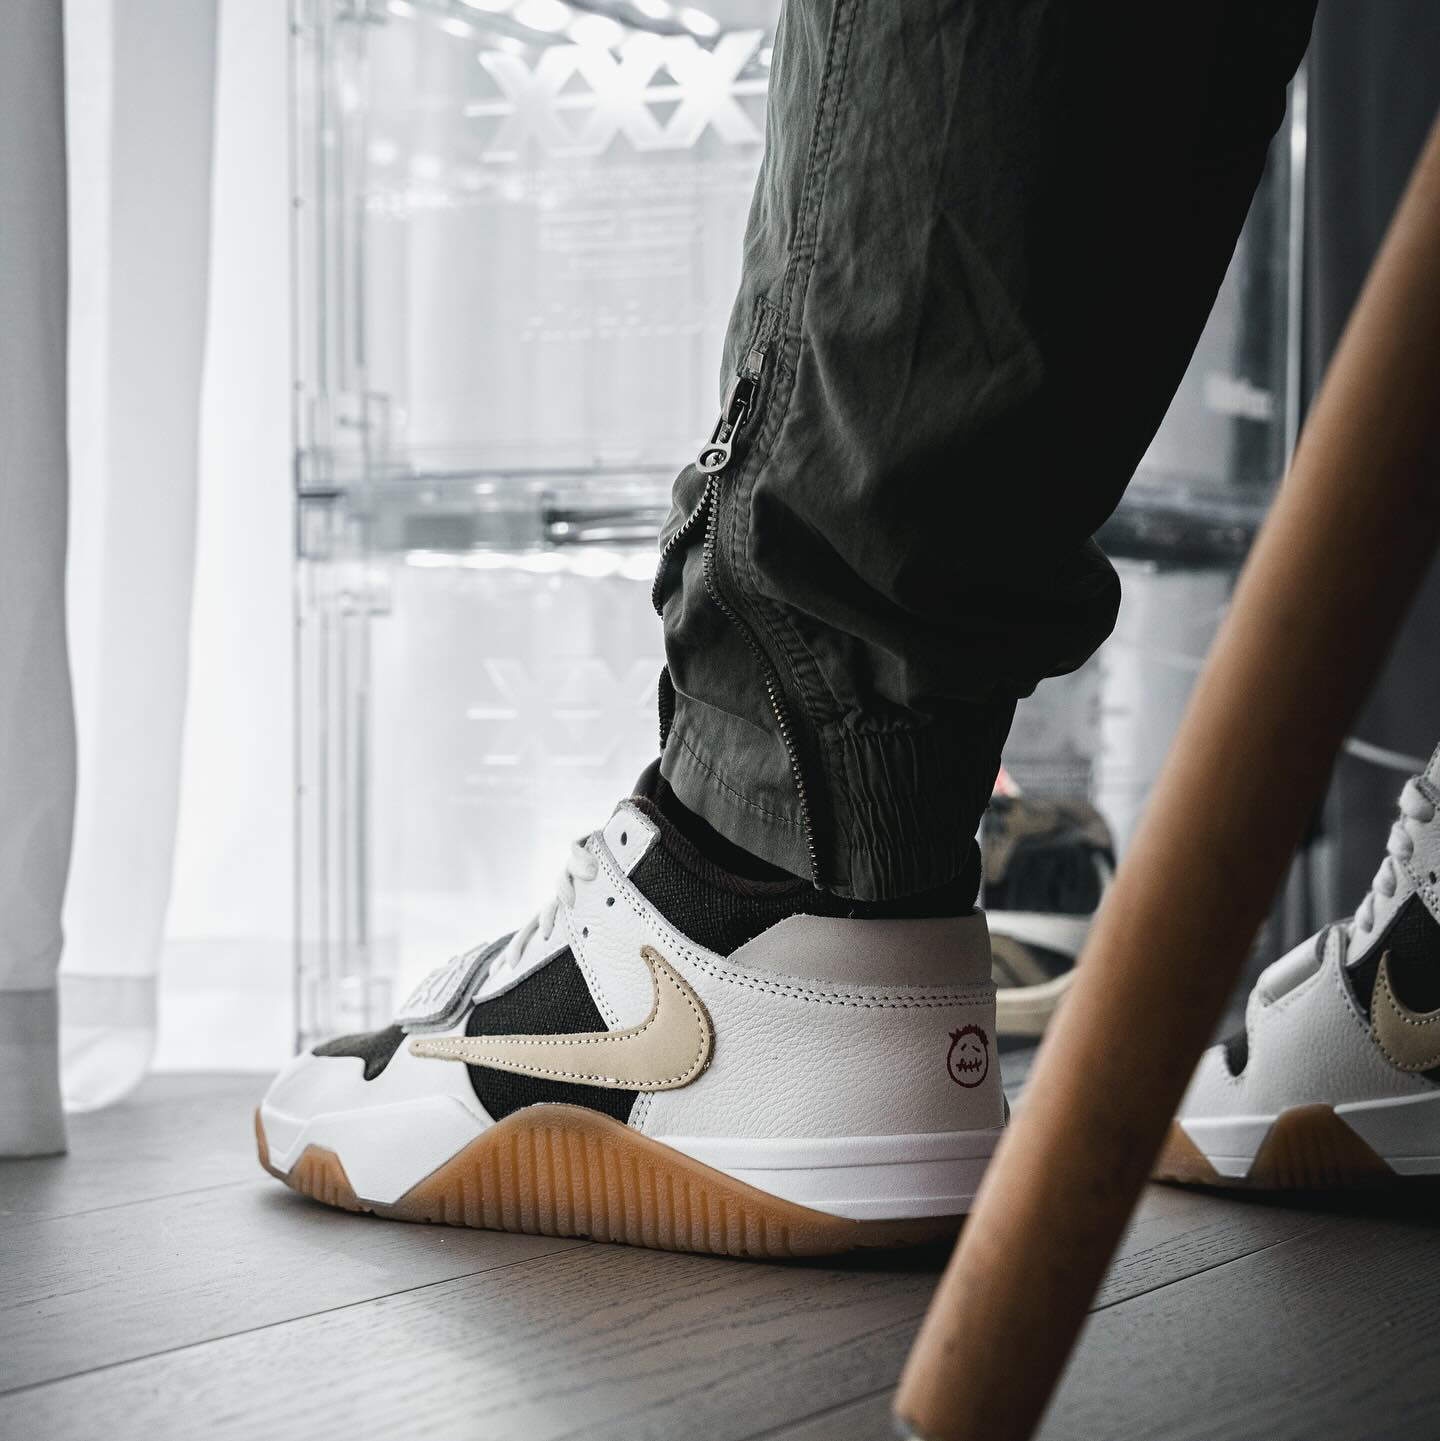 Travis Scott's Signature Jordan Shoe: Do Sneakerheads Care?